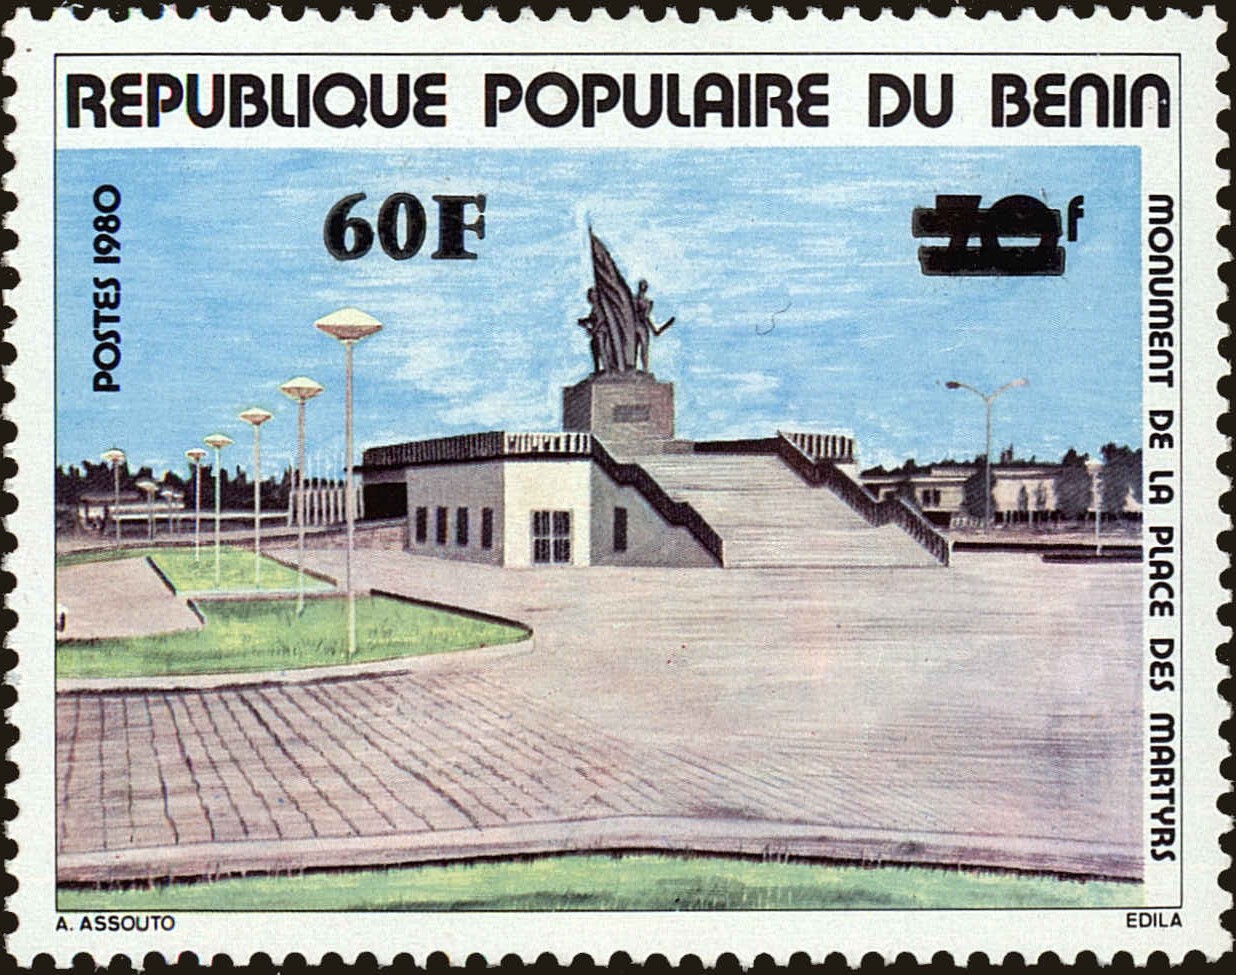 Front view of Benin 539 collectors stamp